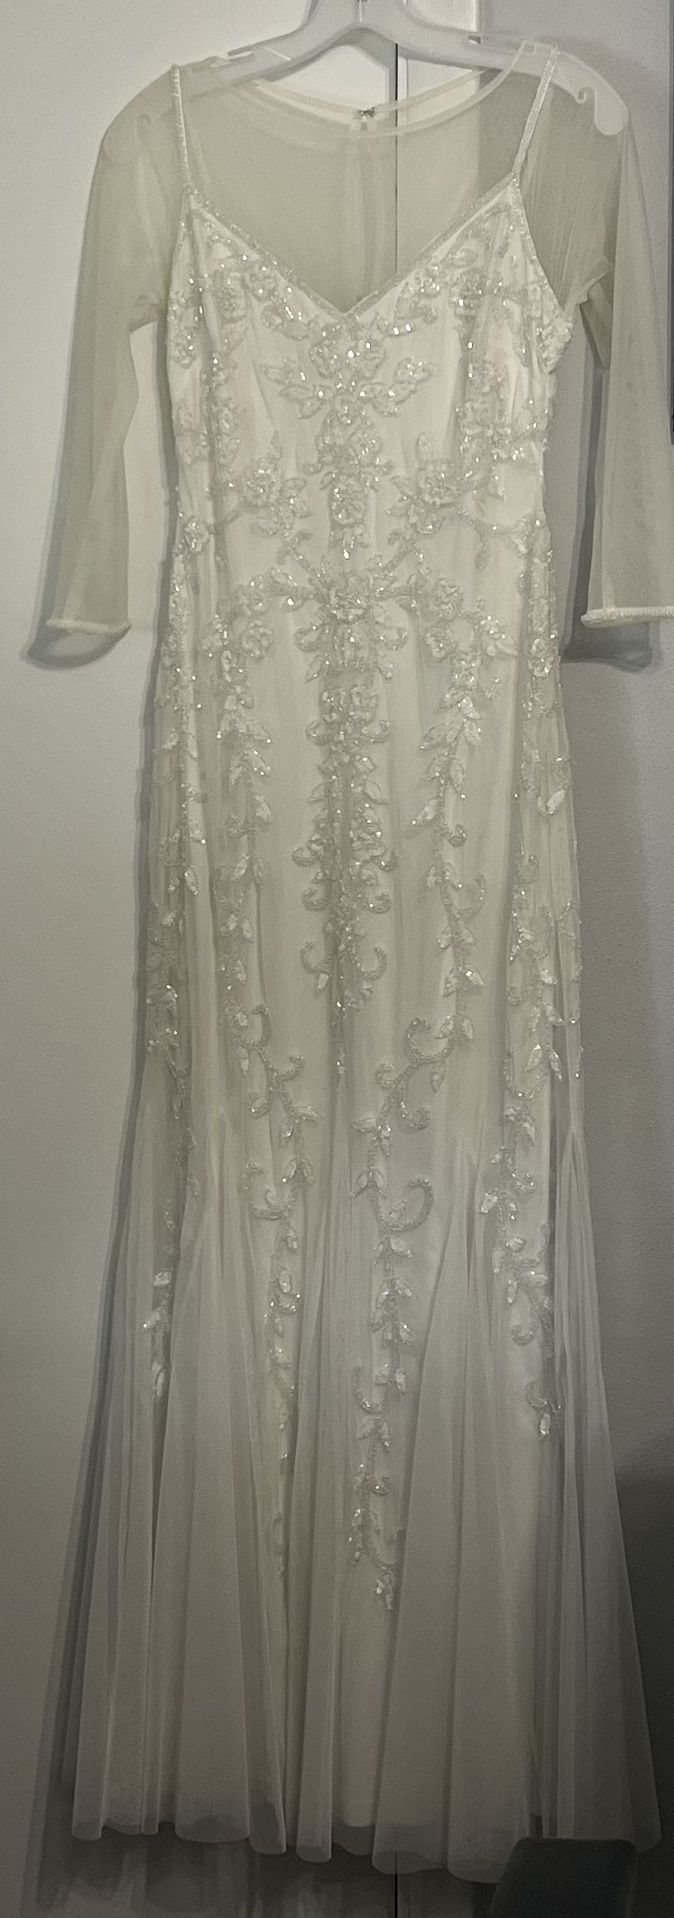 Ivory Wedding Dress Size 12 (Fits Size 6)